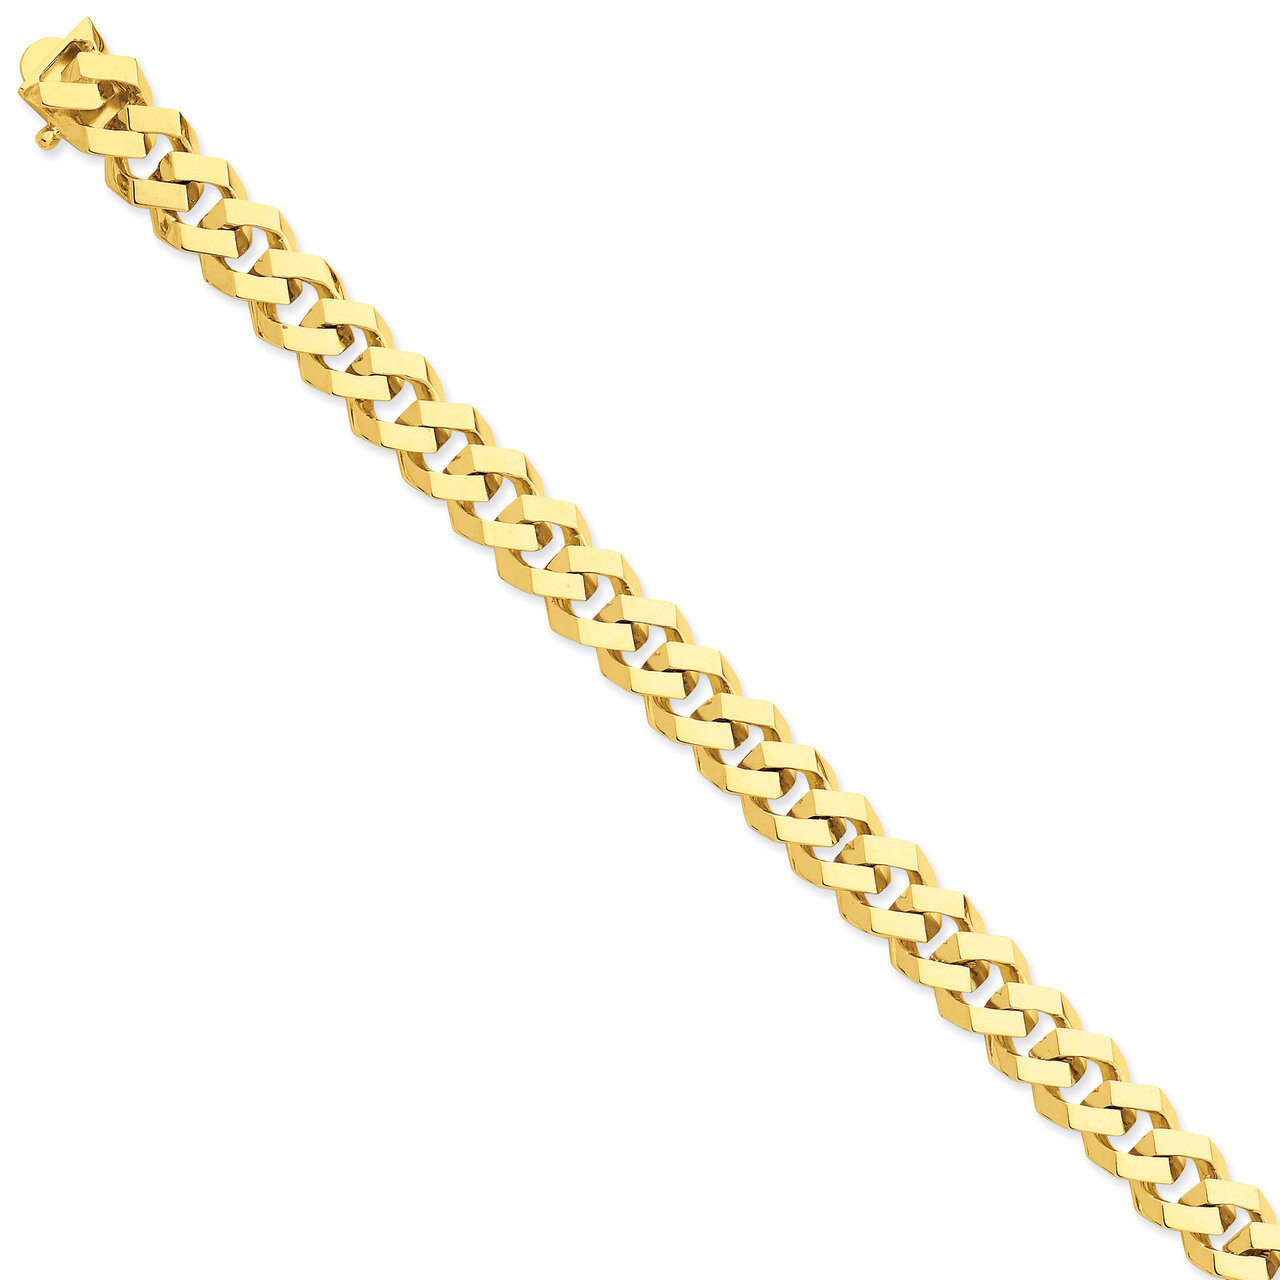 10mm Hand-polished Fancy Link Chain 22 Inch 14k Gold LK158-22